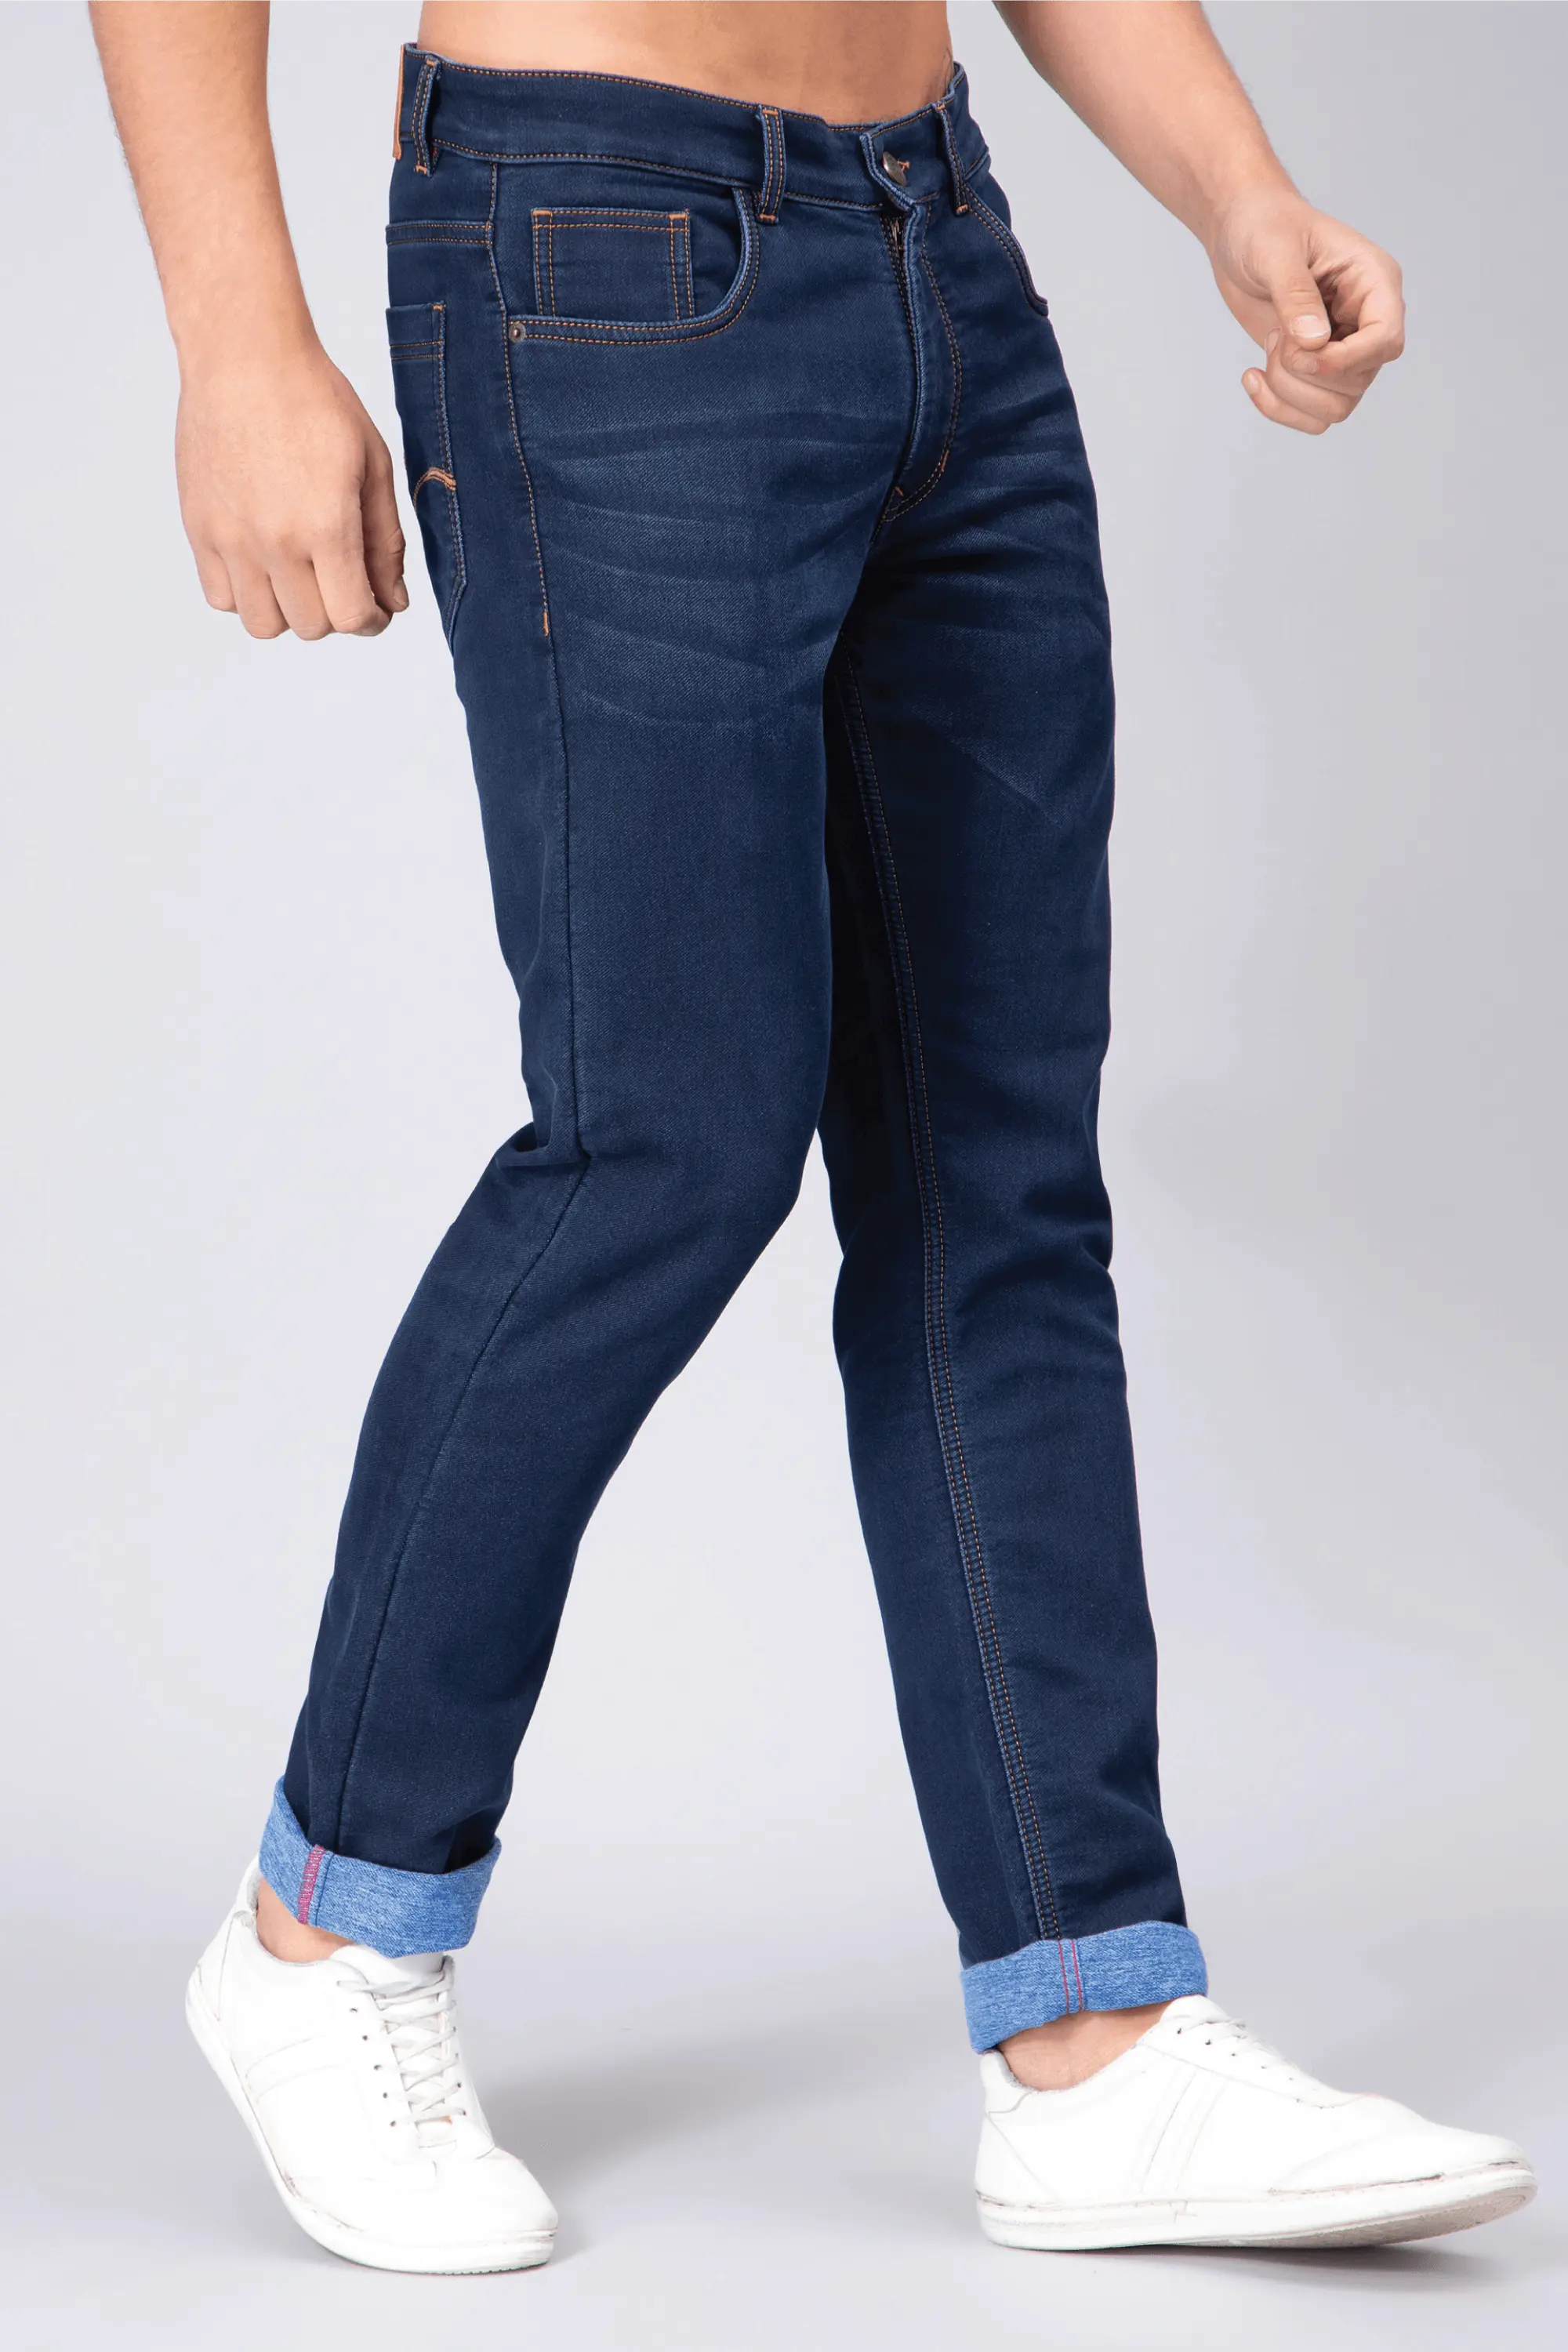 Spykar Limited Edition Mid Blue Slim Fit Narrow Length Low rise Clean Look  Premium Stretchable Denim For Men (Skinny) - mdltd1bc054midblue